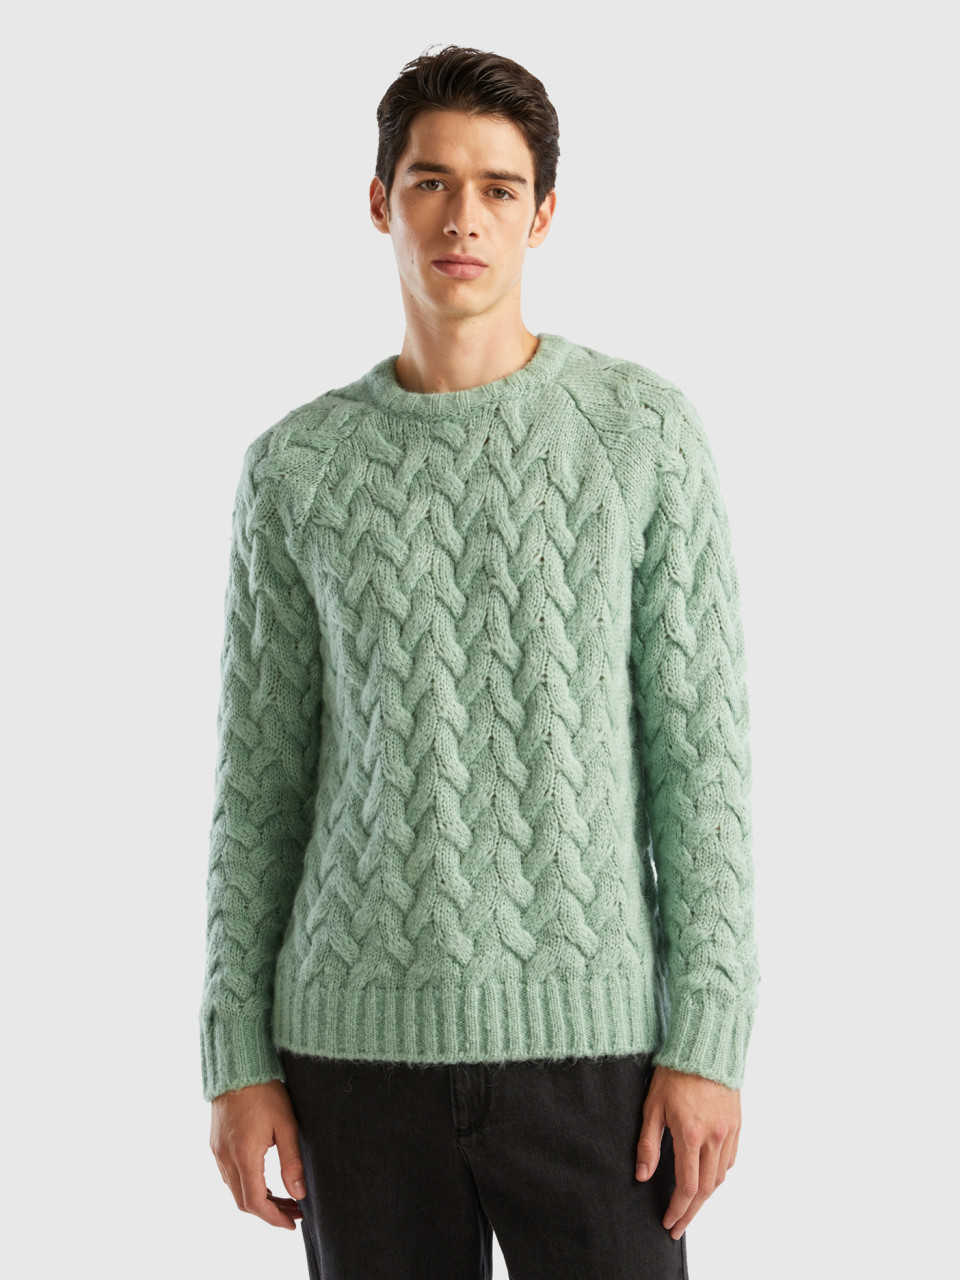 Benetton, Mohair Blend Cable Knit Sweater, Aqua, Men